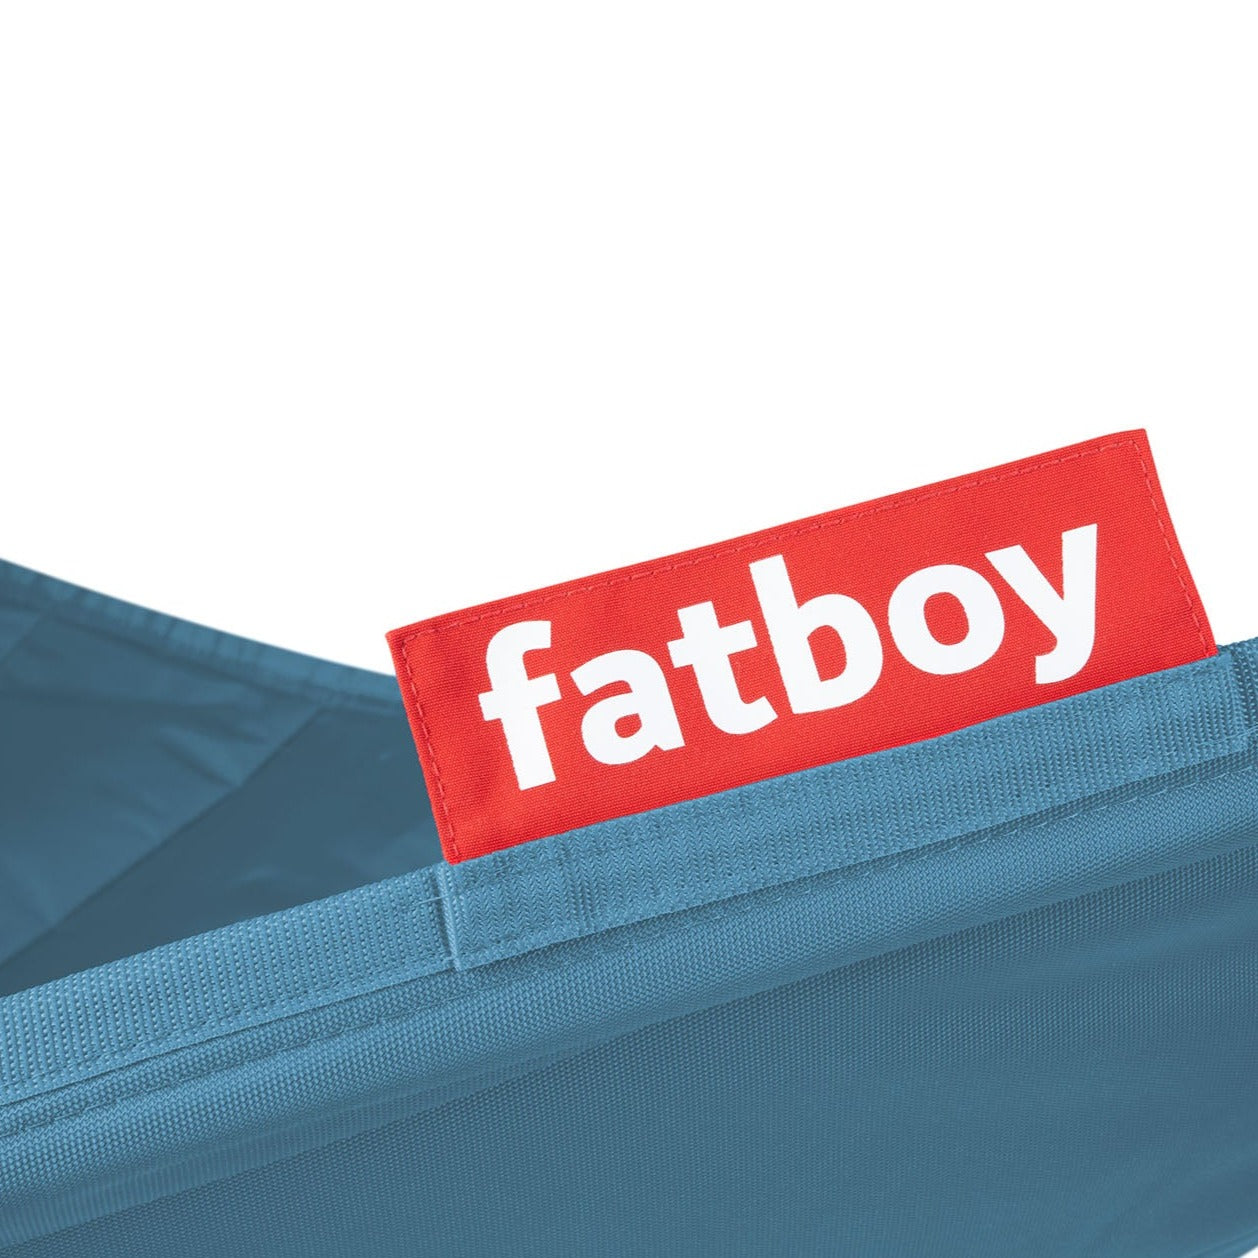 Fatboy Headdemock Deluxe hamakas